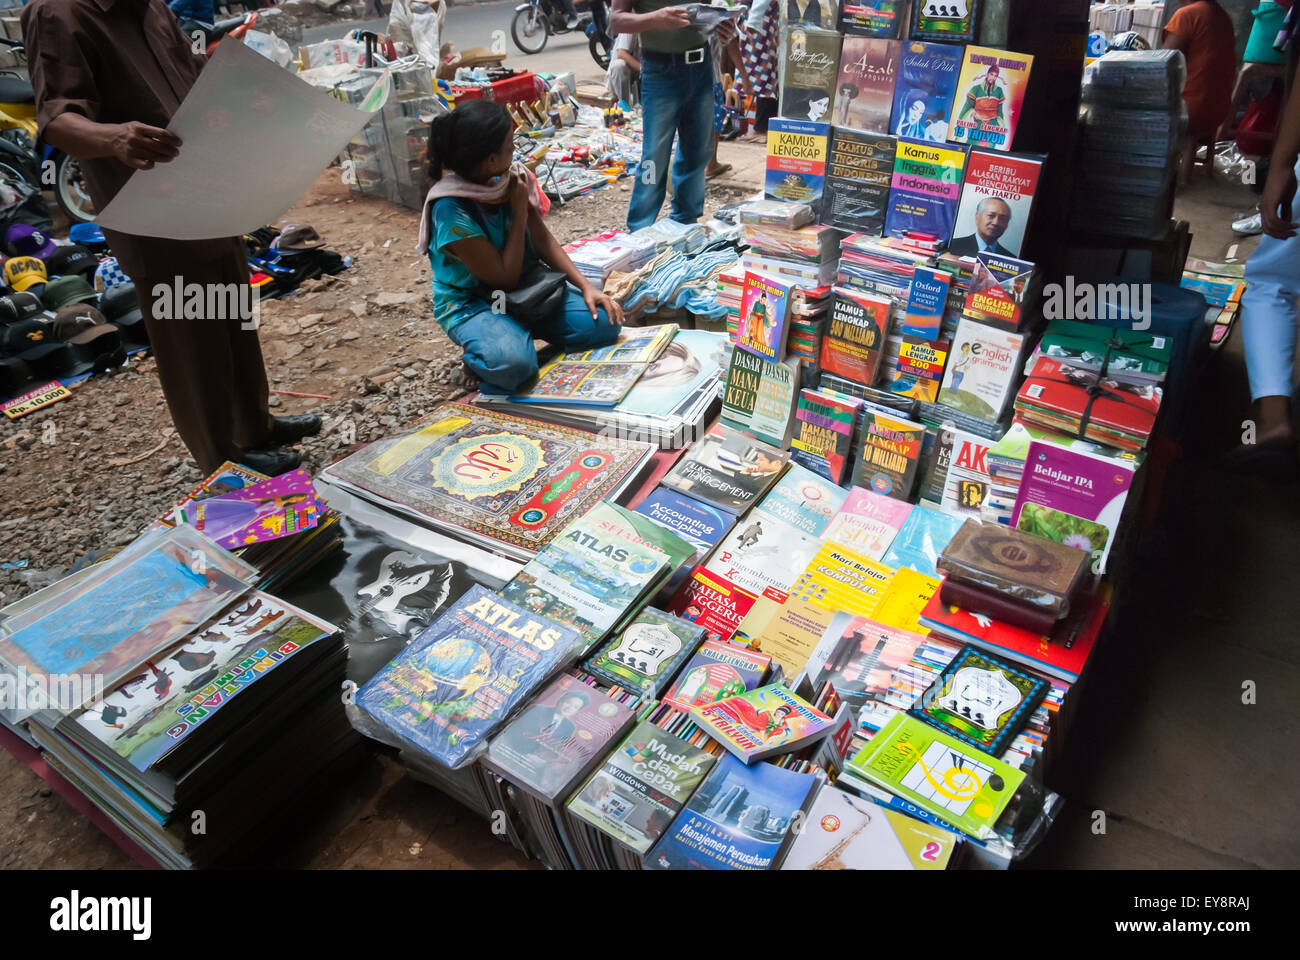 A book vendor at a roadside market in Jatinegara, East Jakarta, Jakarta, Indonesia. Stock Photo